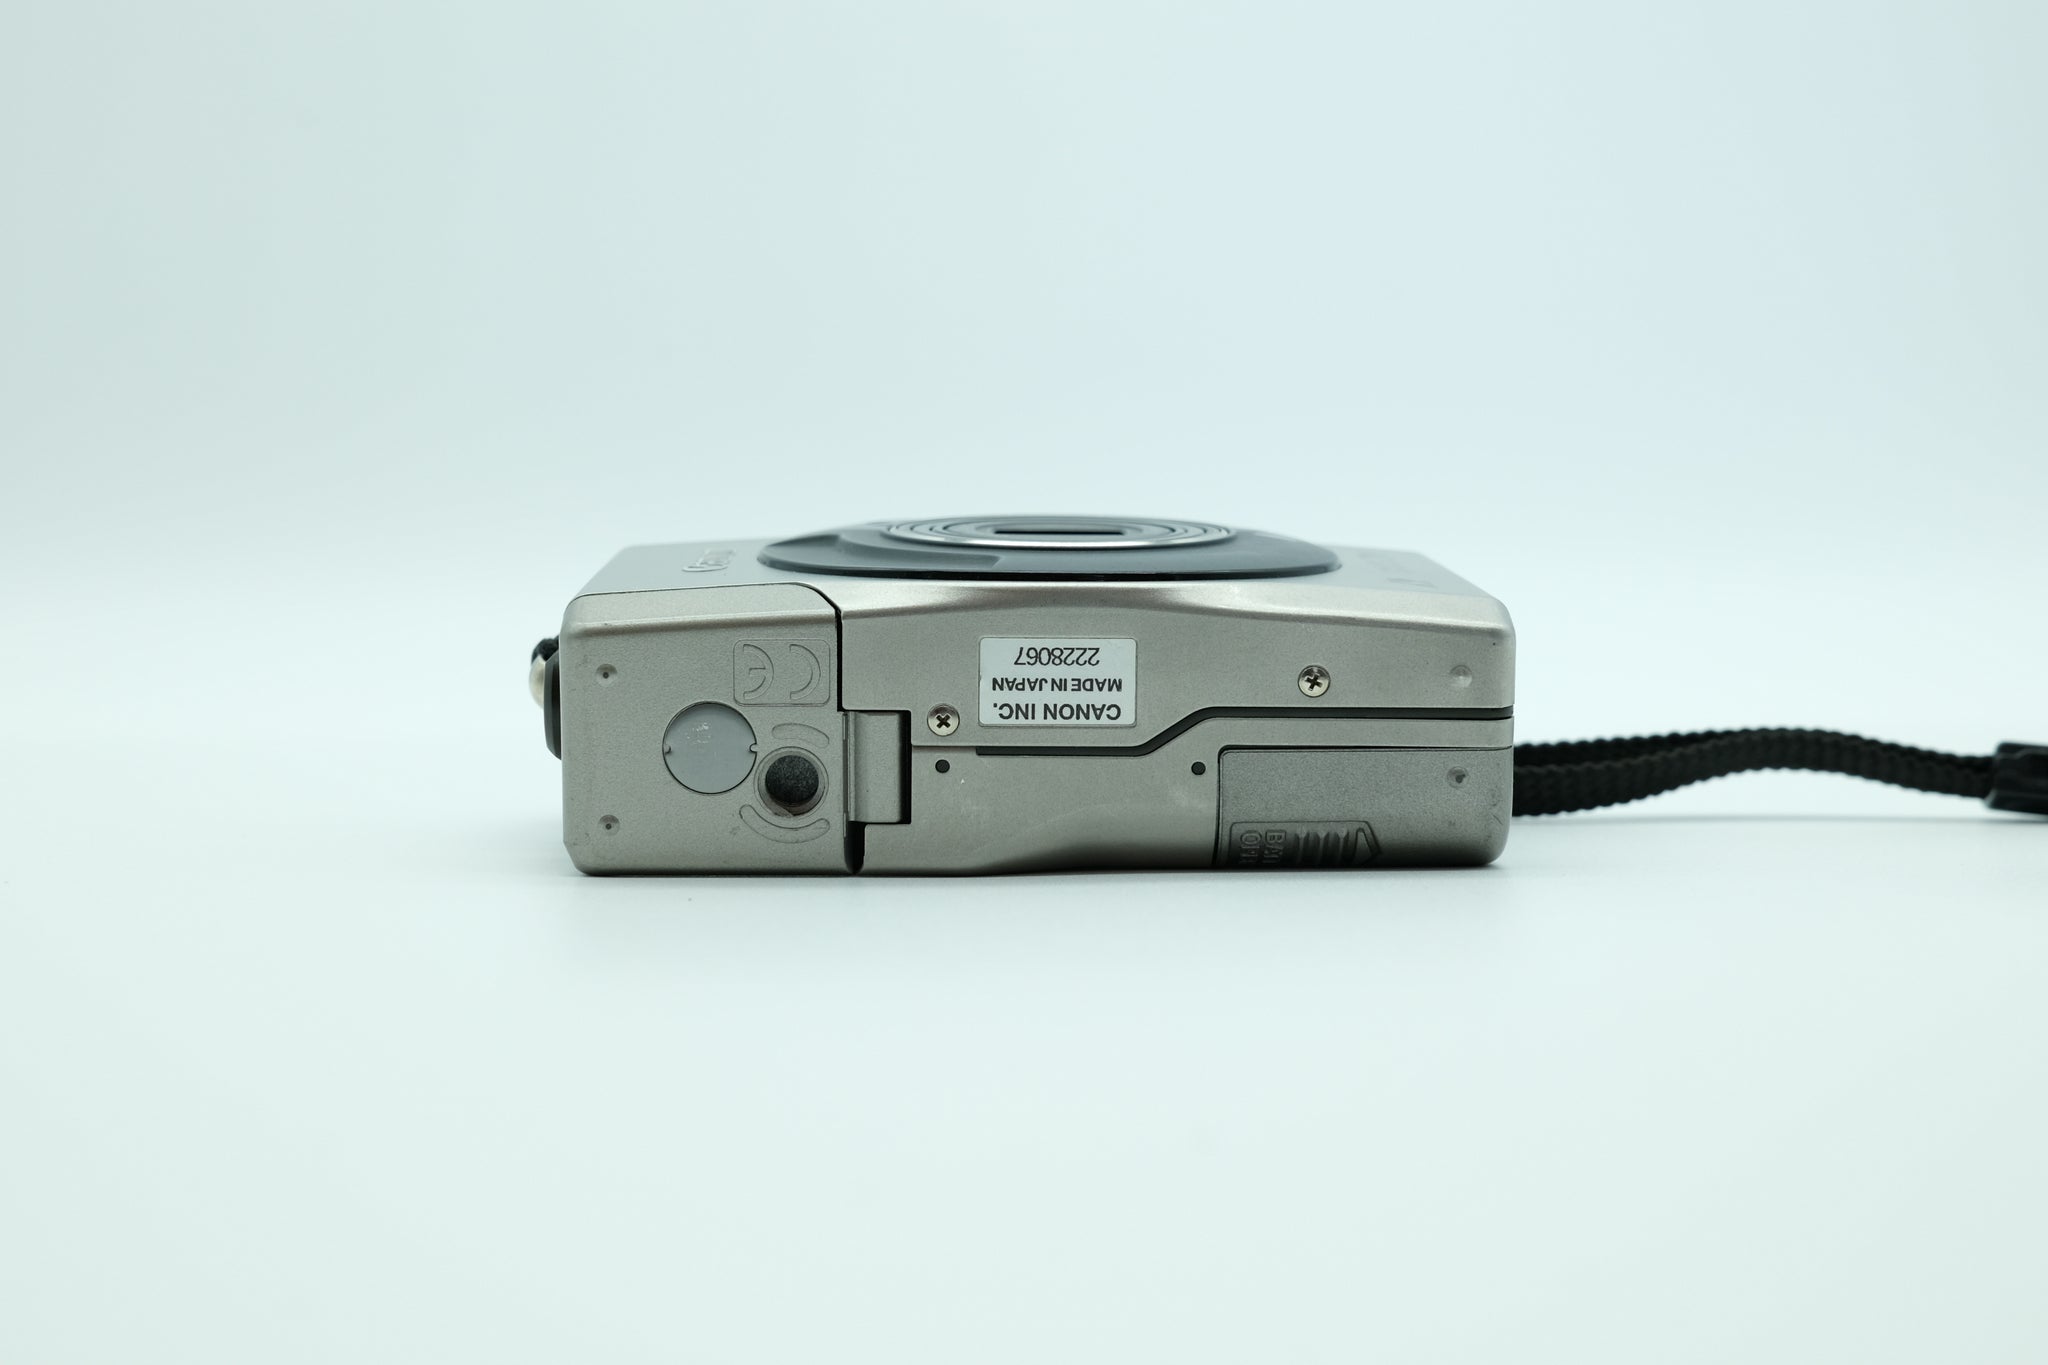 Canon IXUS z70 - APS Film Camera - Great Cond